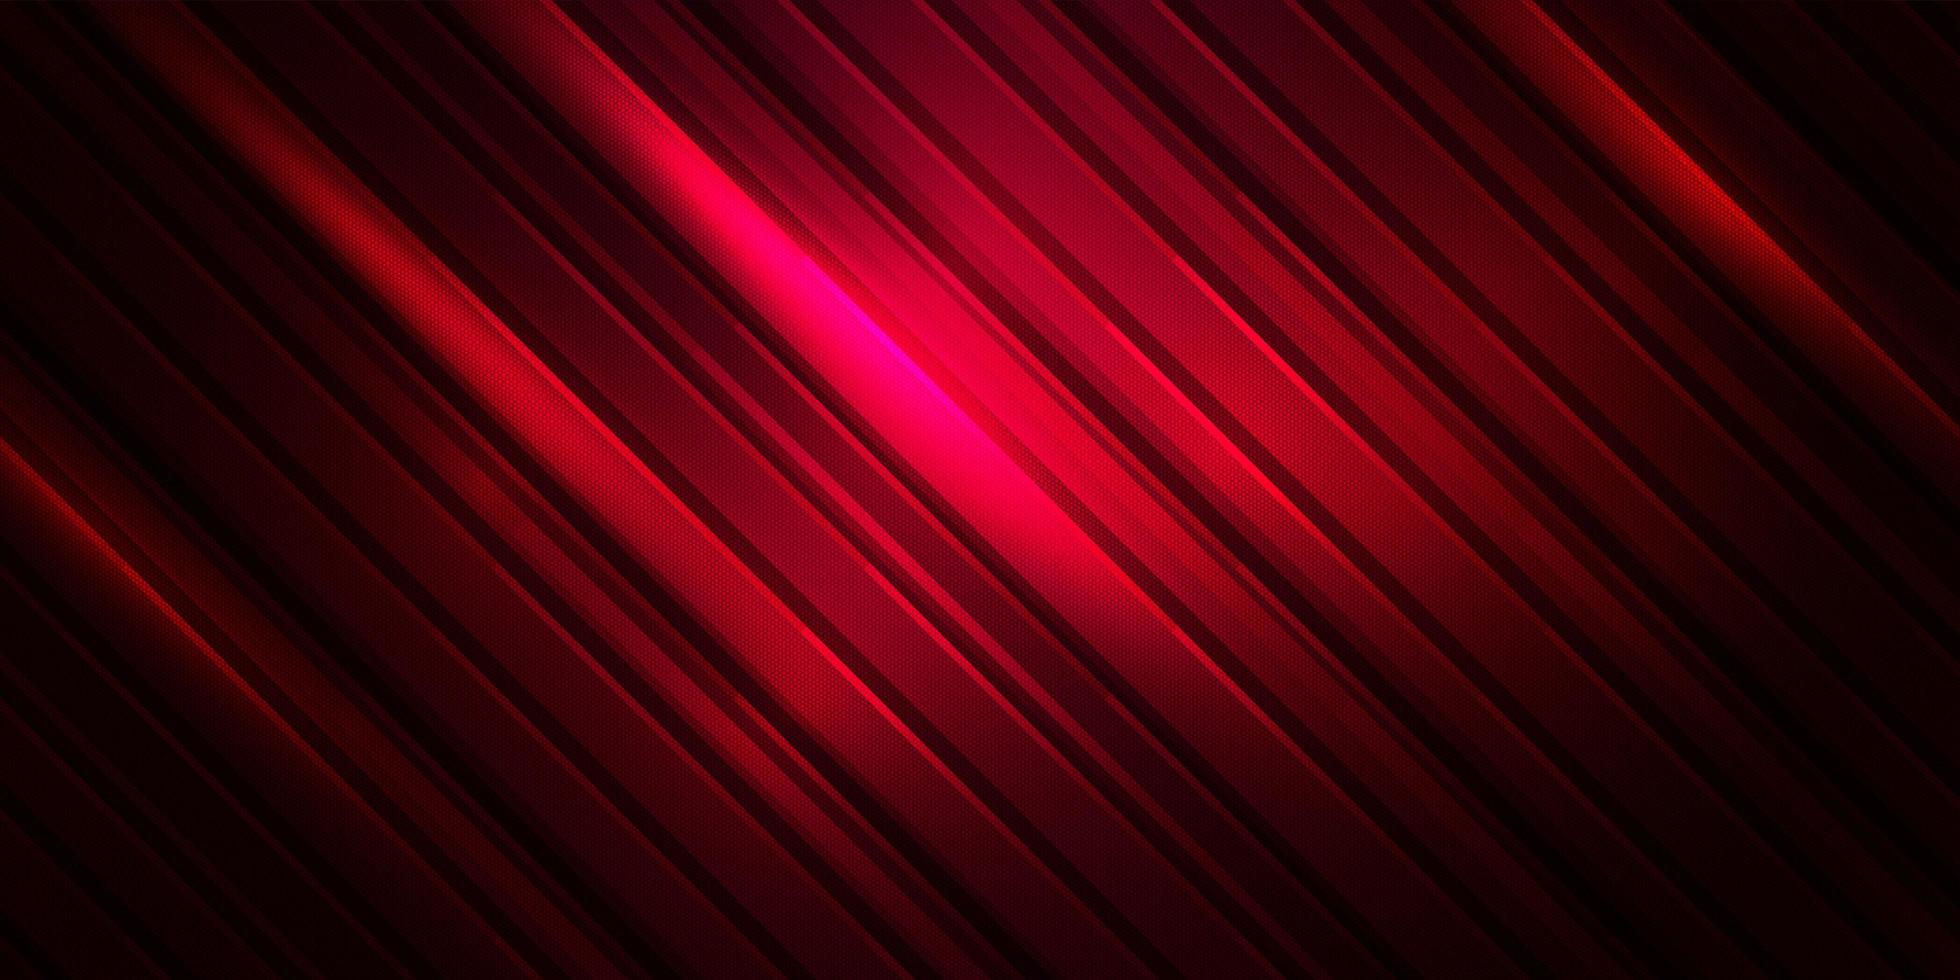 Stripe red color line wallpaper vector